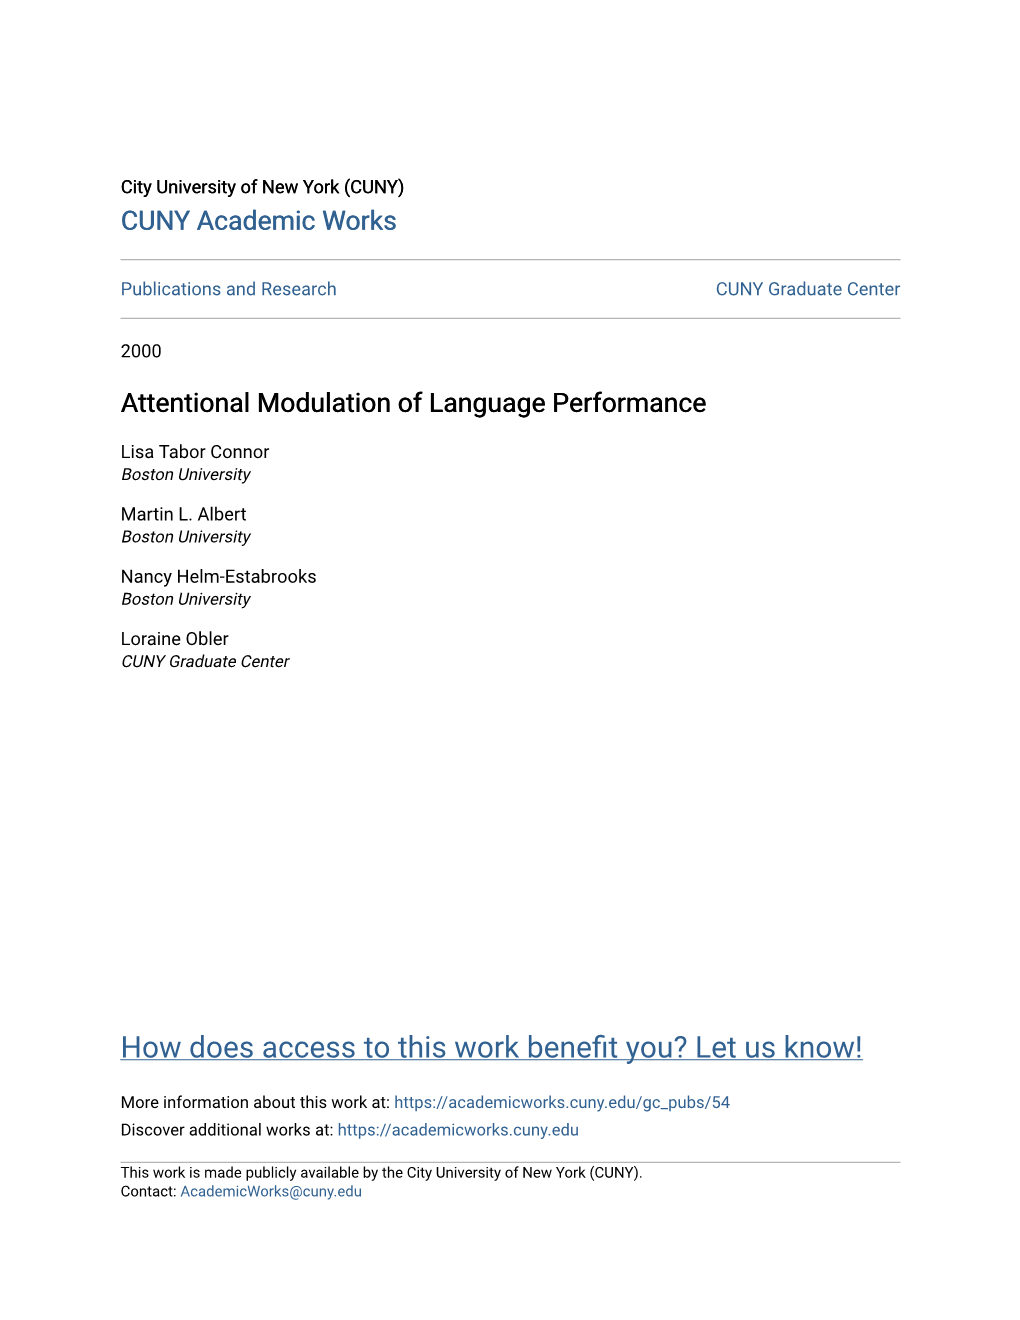 Attentional Modulation of Language Performance